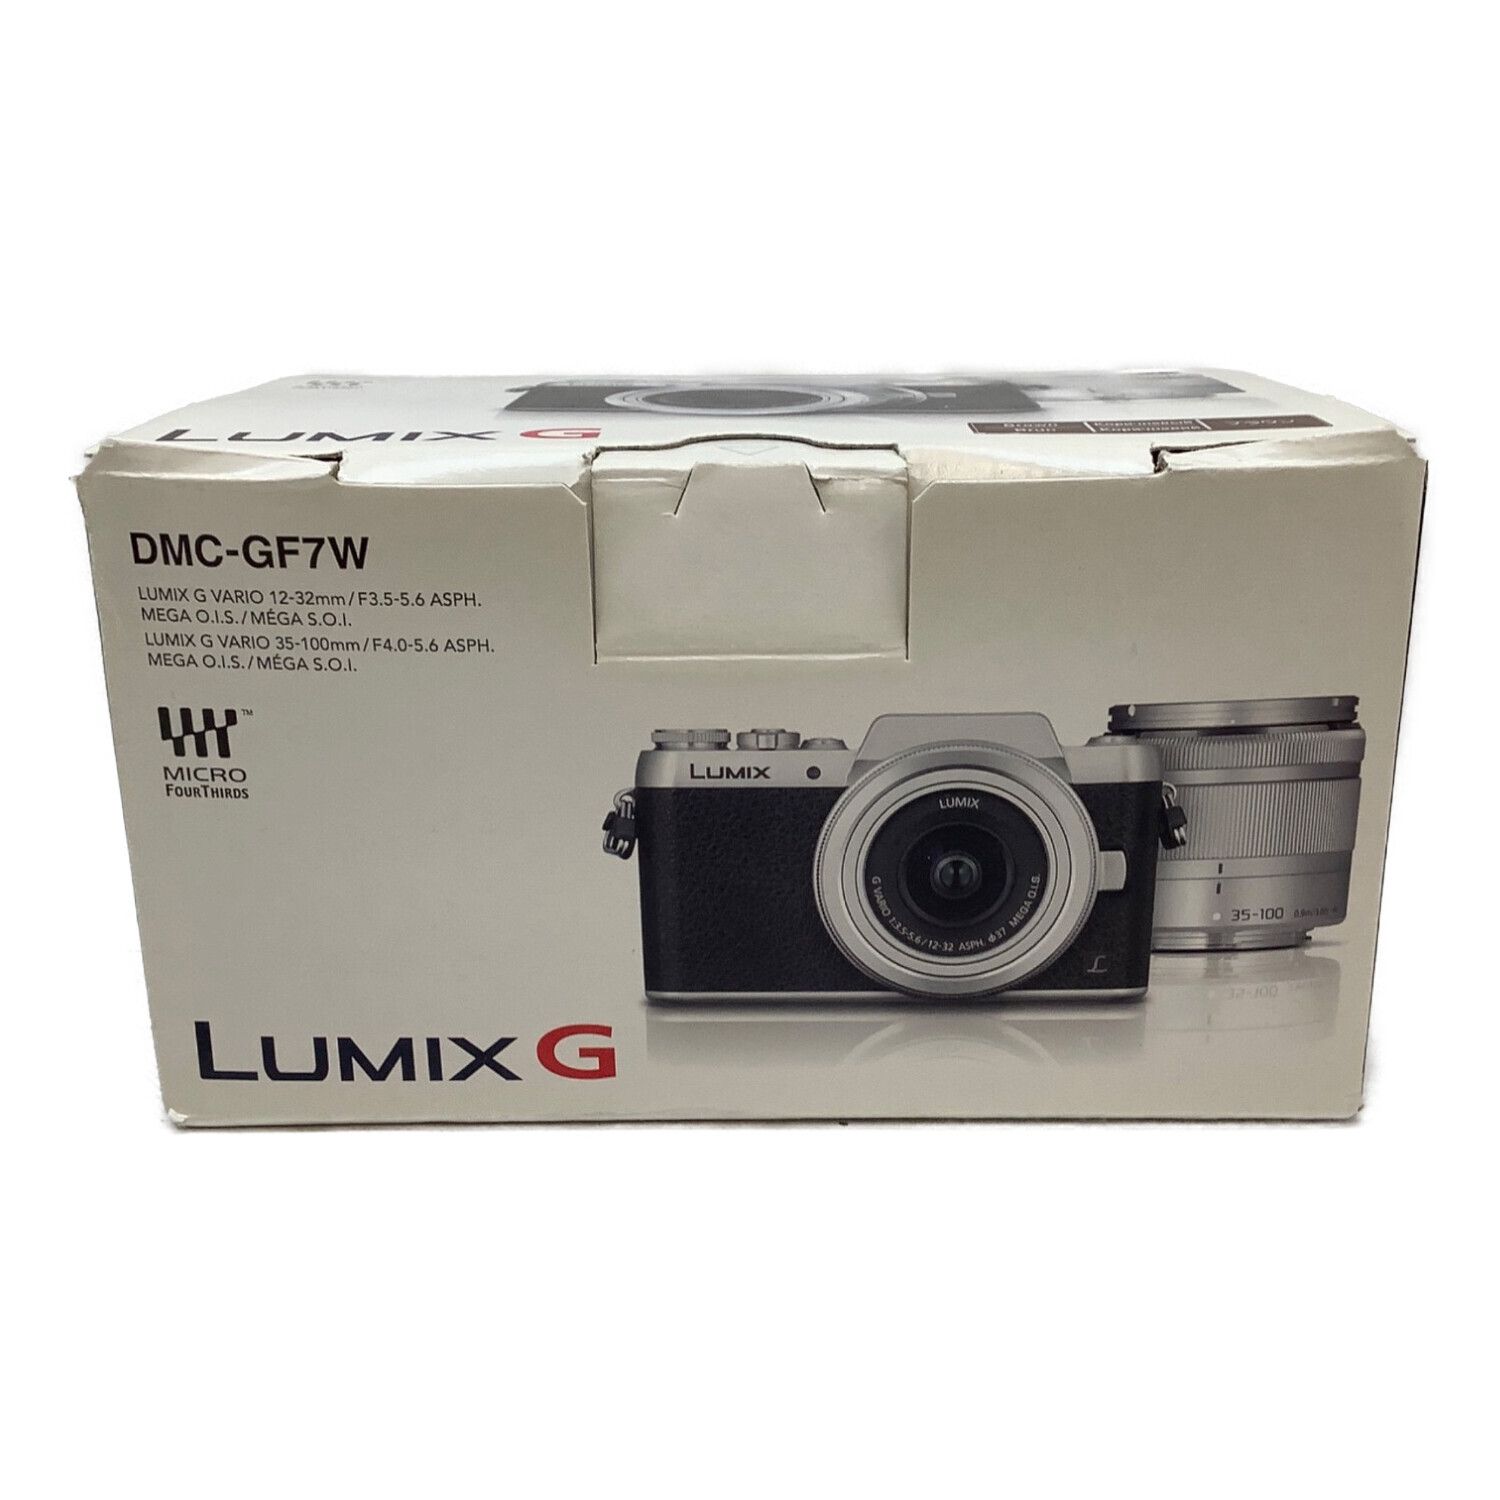 Panasonic LUMIX G DMC-GF7Wカメラ